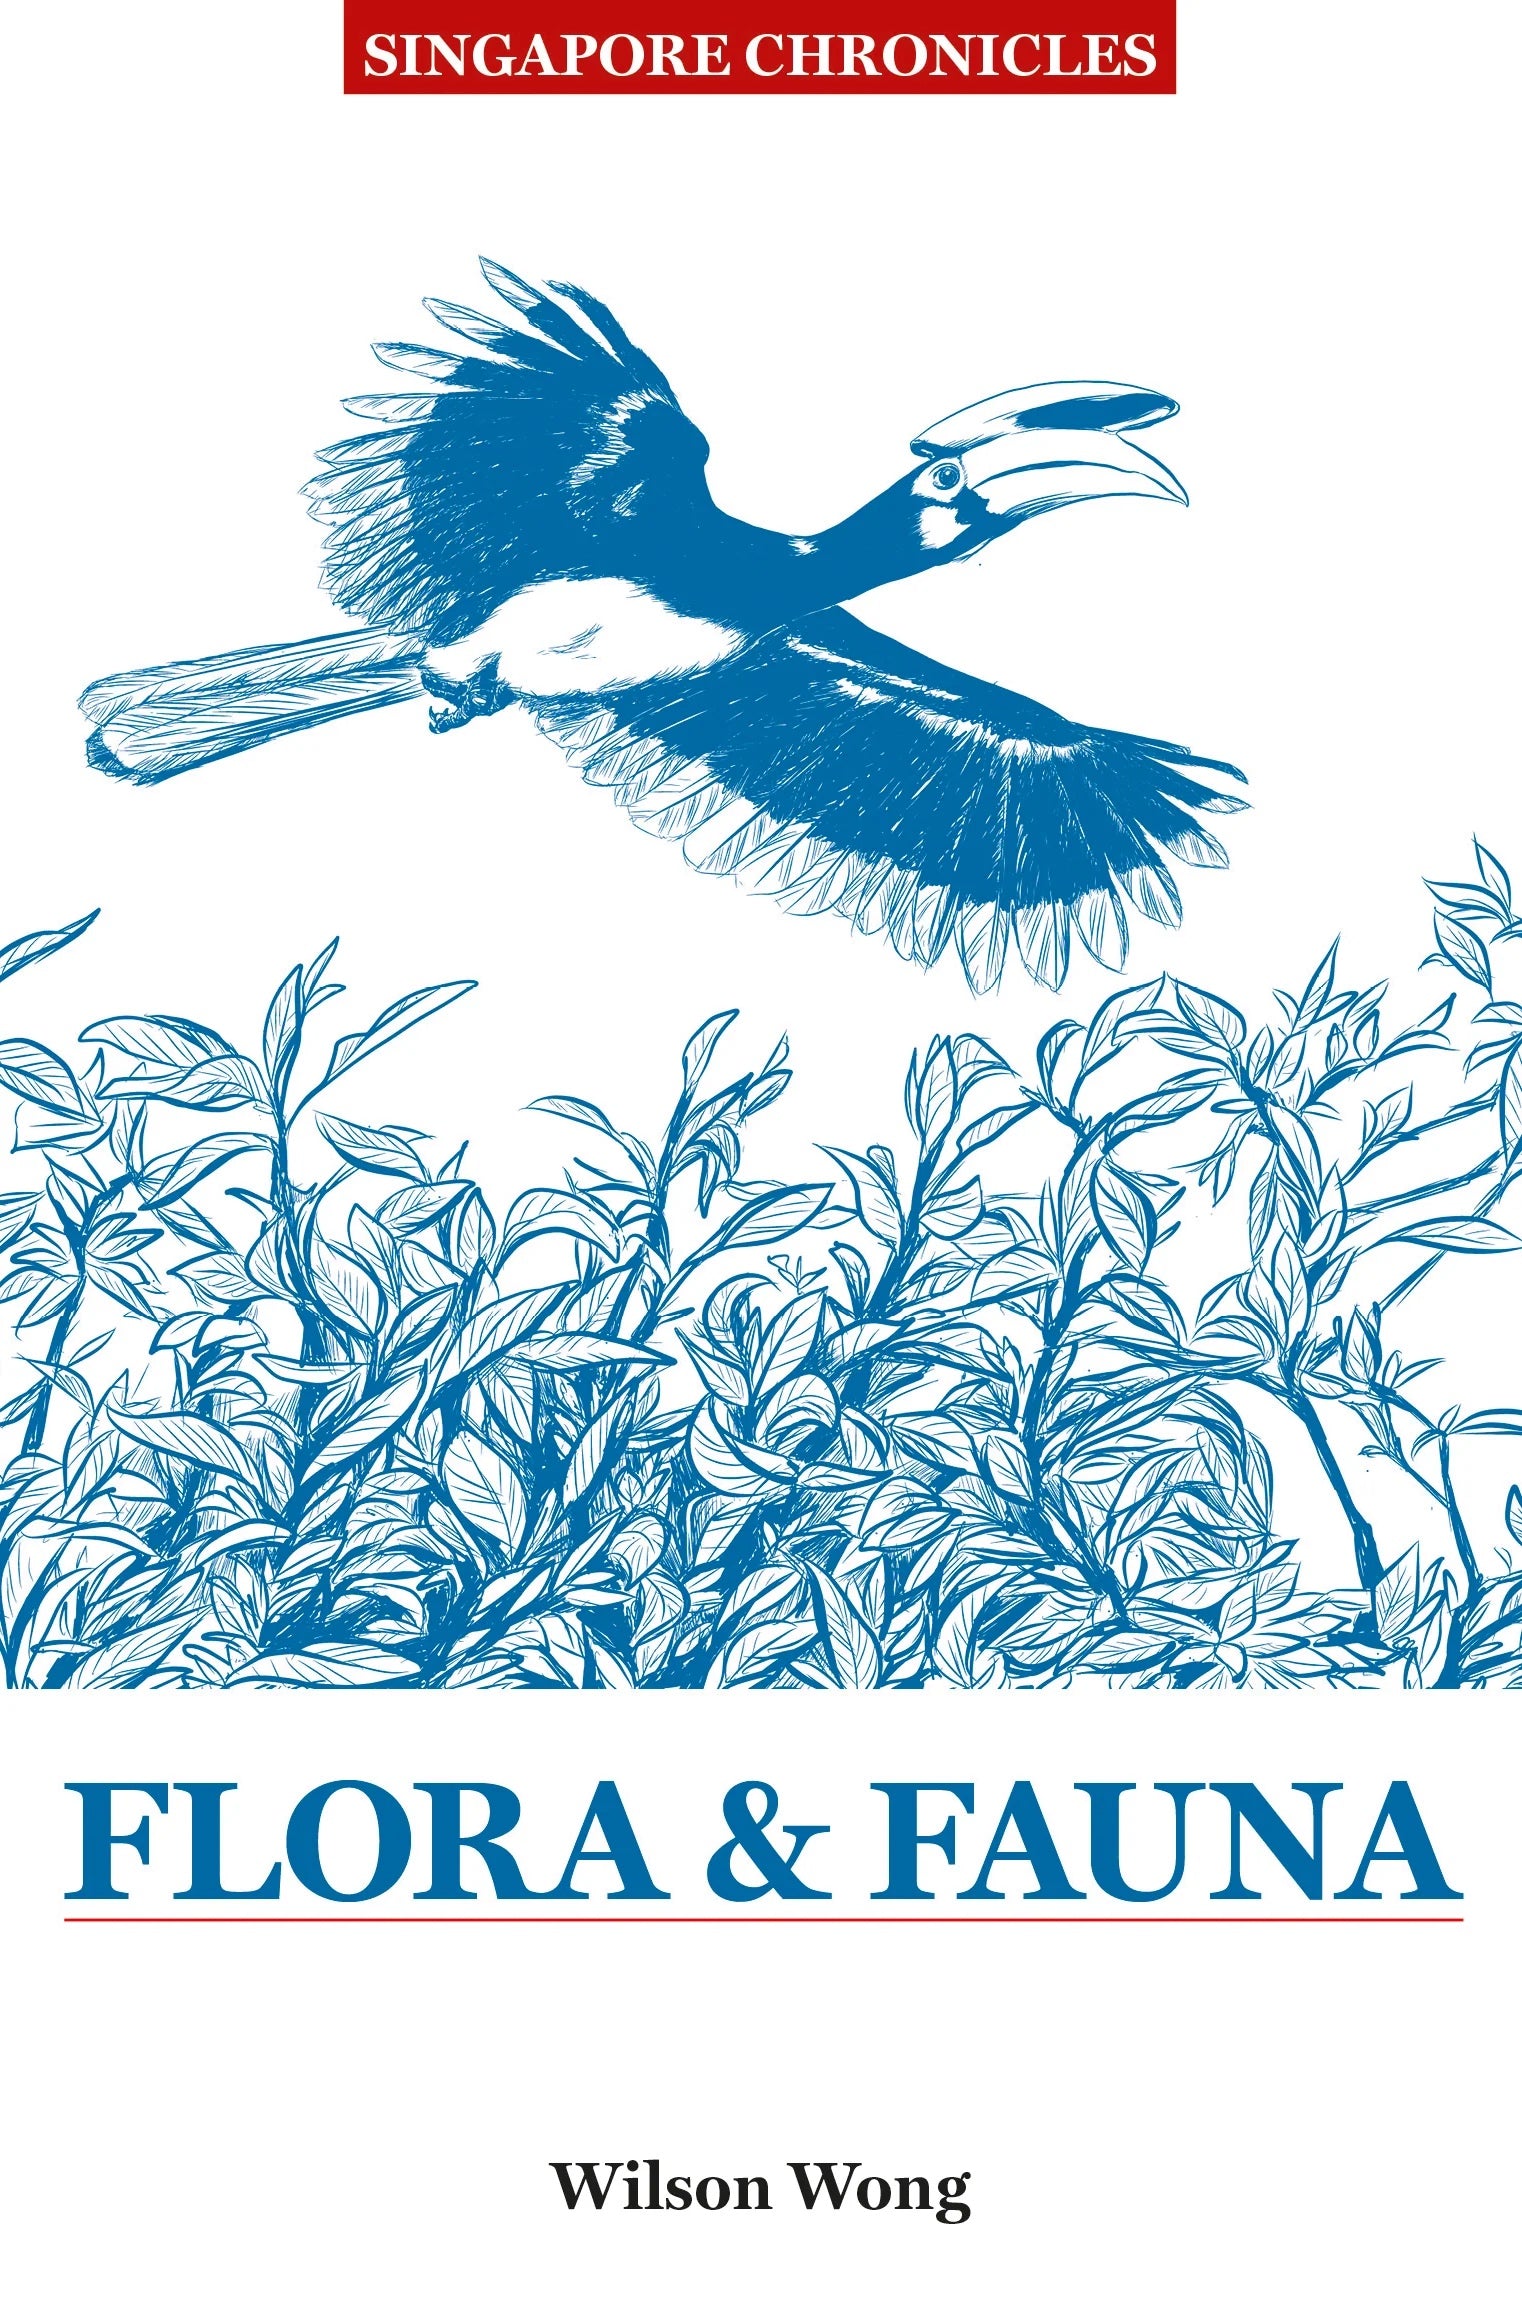 Singapore Chronicles: Flora & Fauna